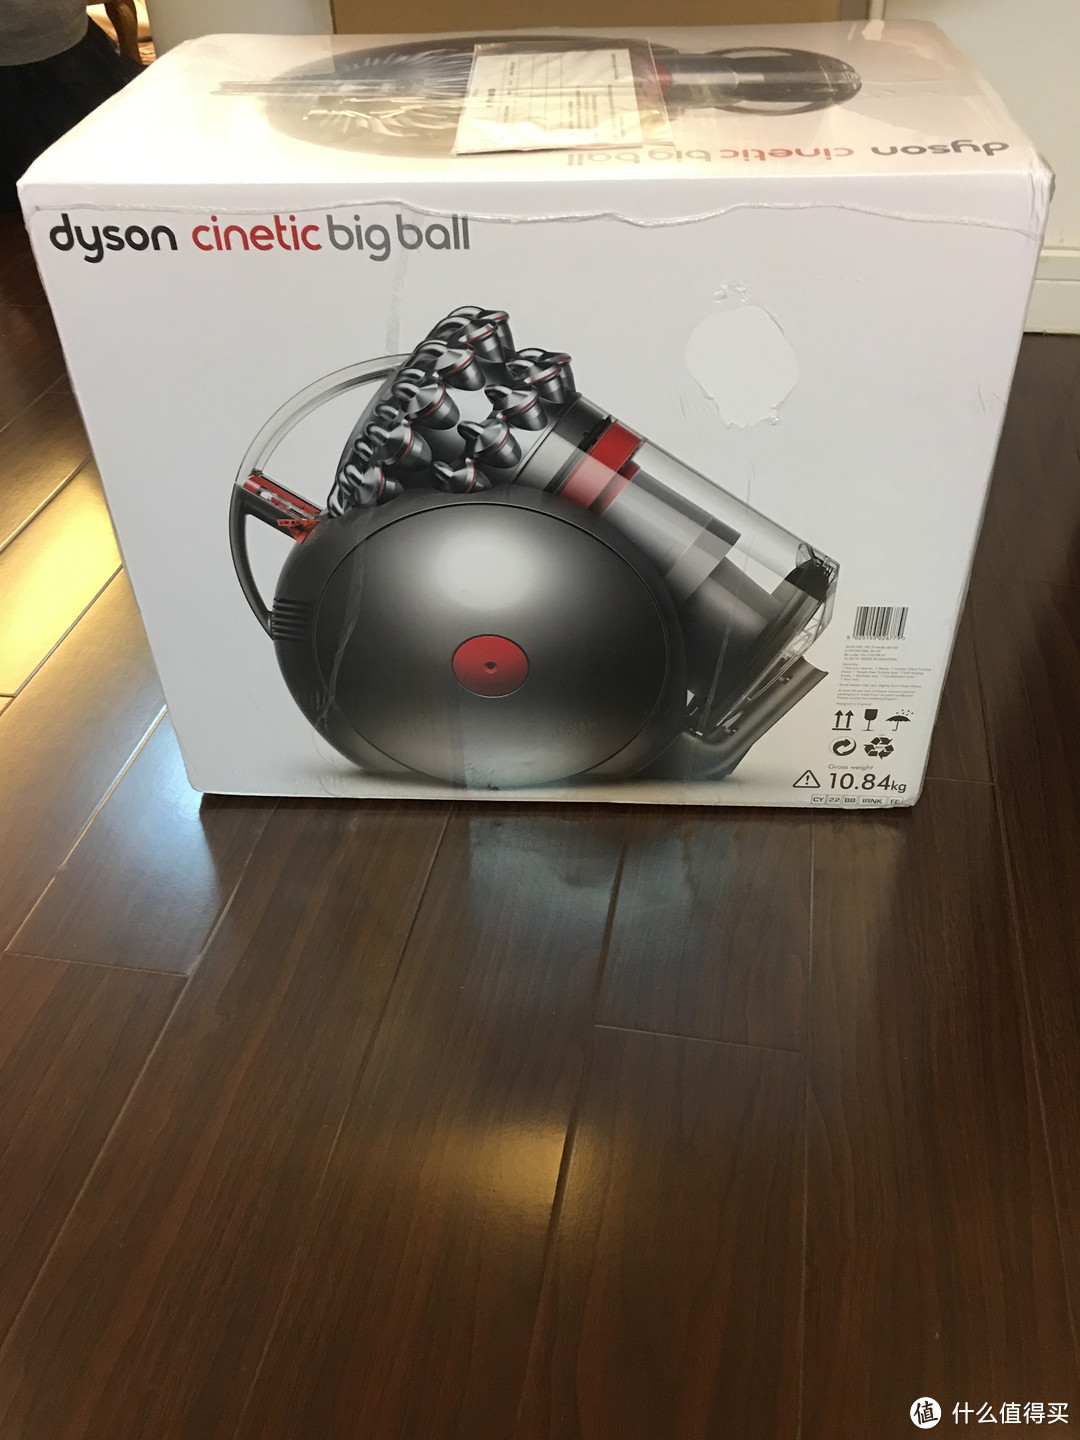 dyson 戴森 国行 Cinetic Big Ball 吸尘器购买心路历程和使用评测